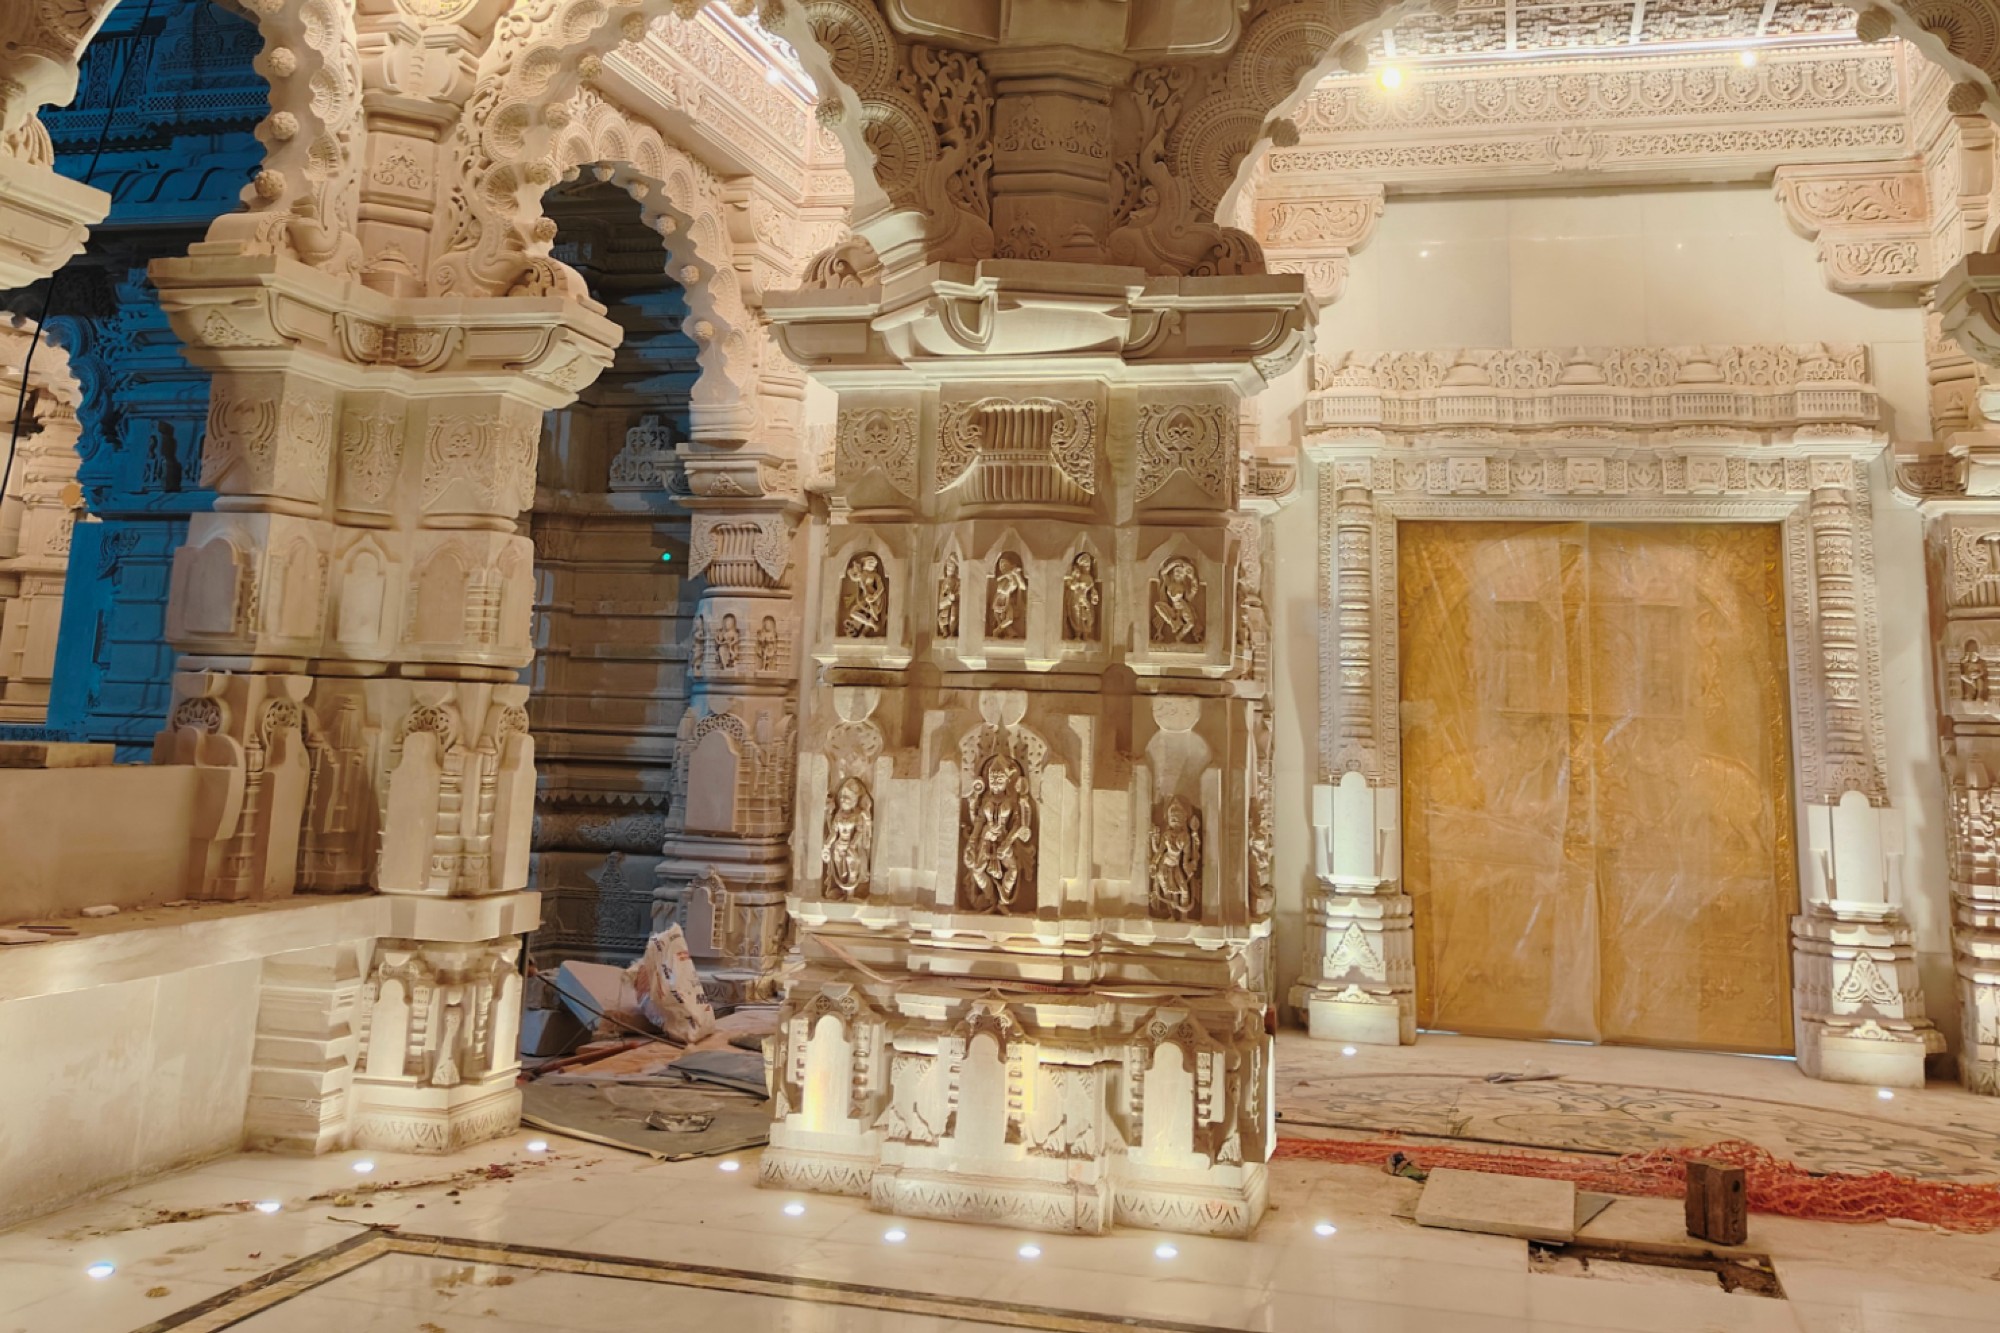 Havells illuminates Garbh Griha Shri Ram Mandir